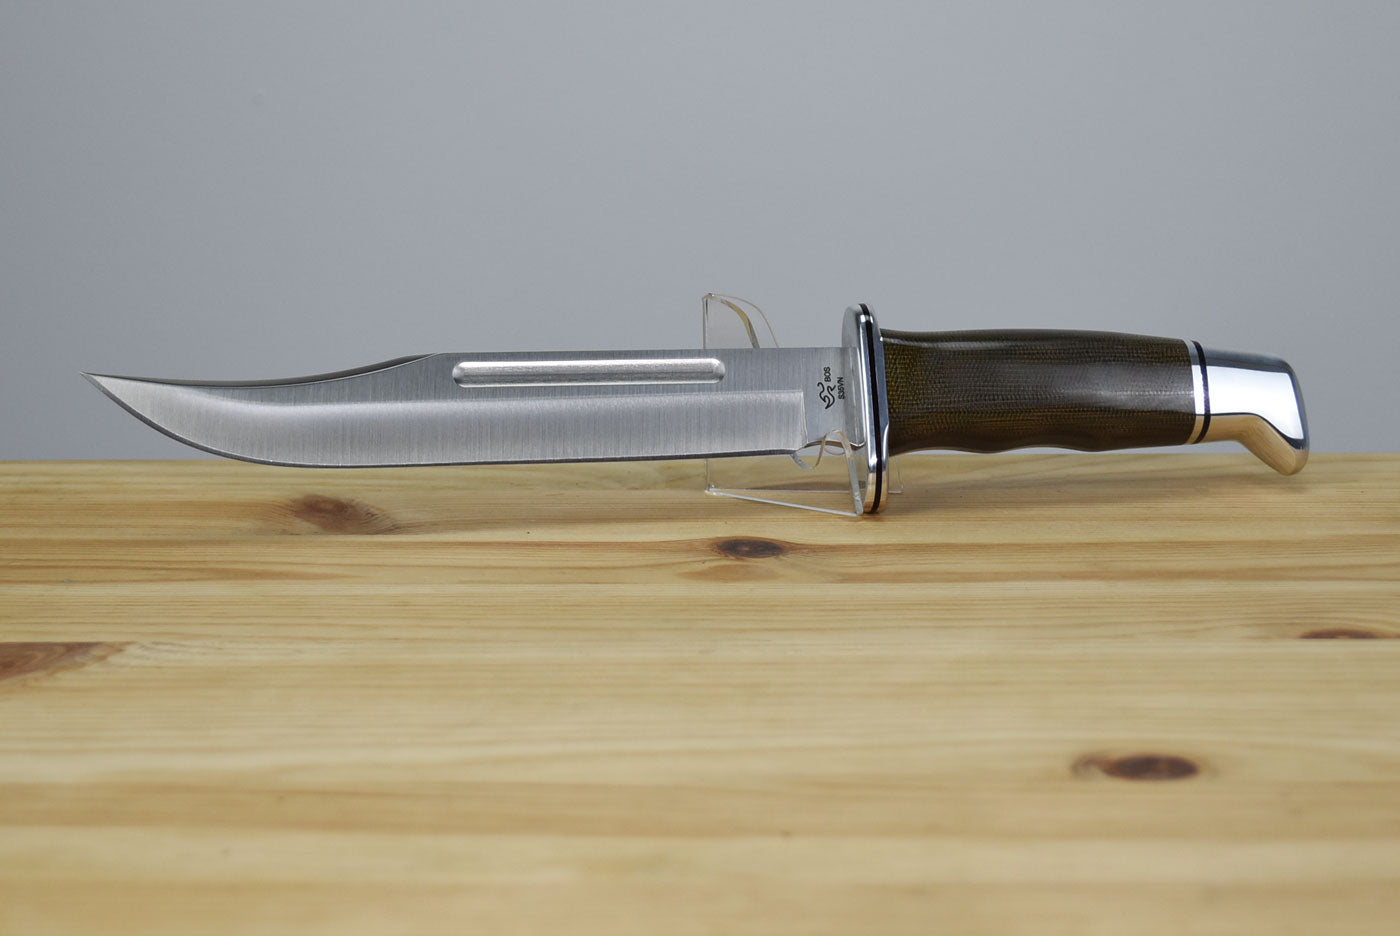 Buck 120 General Pro Fixed Blade